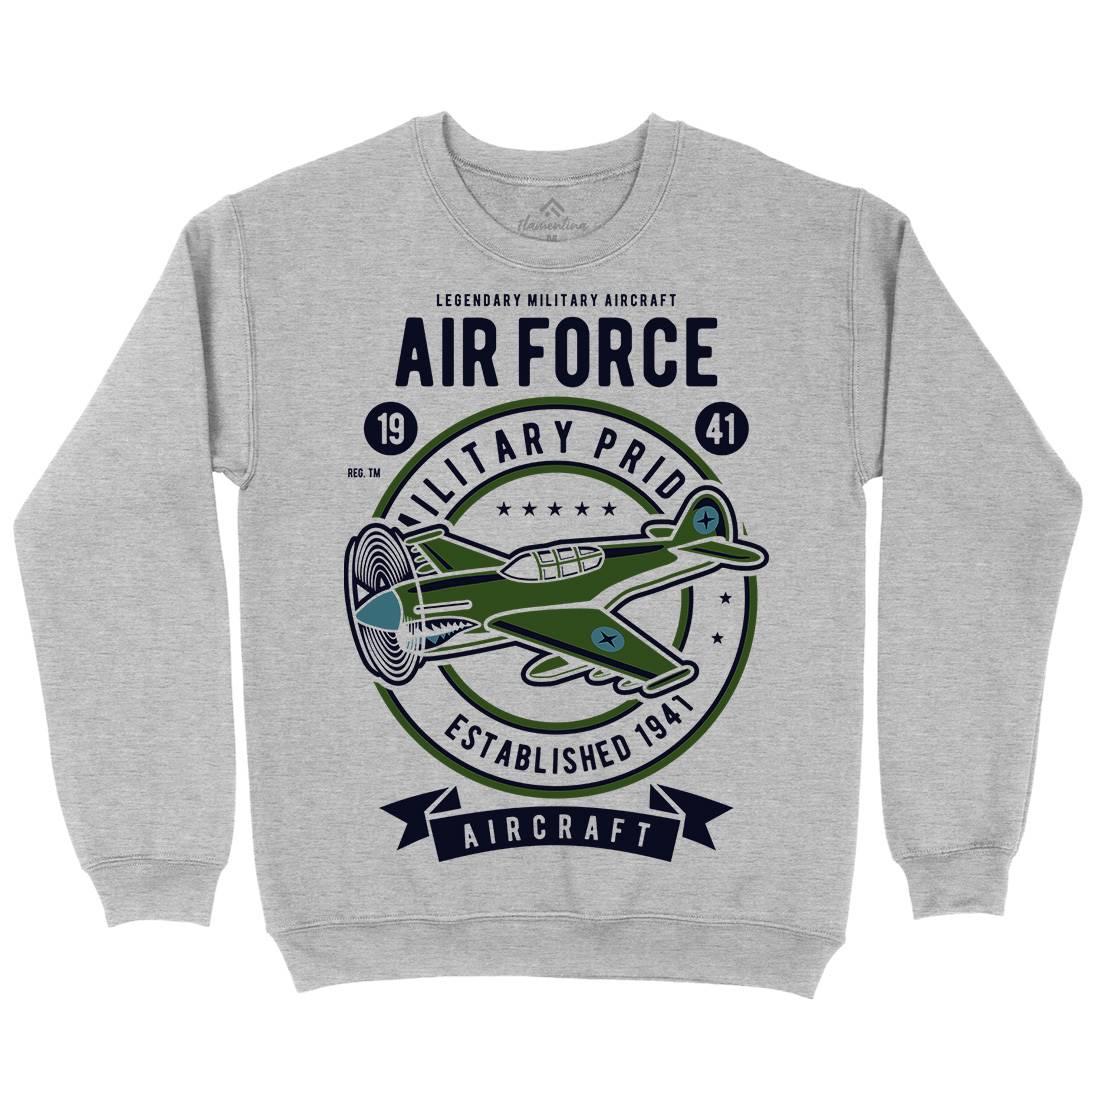 Air Force Mens Crew Neck Sweatshirt Army D502